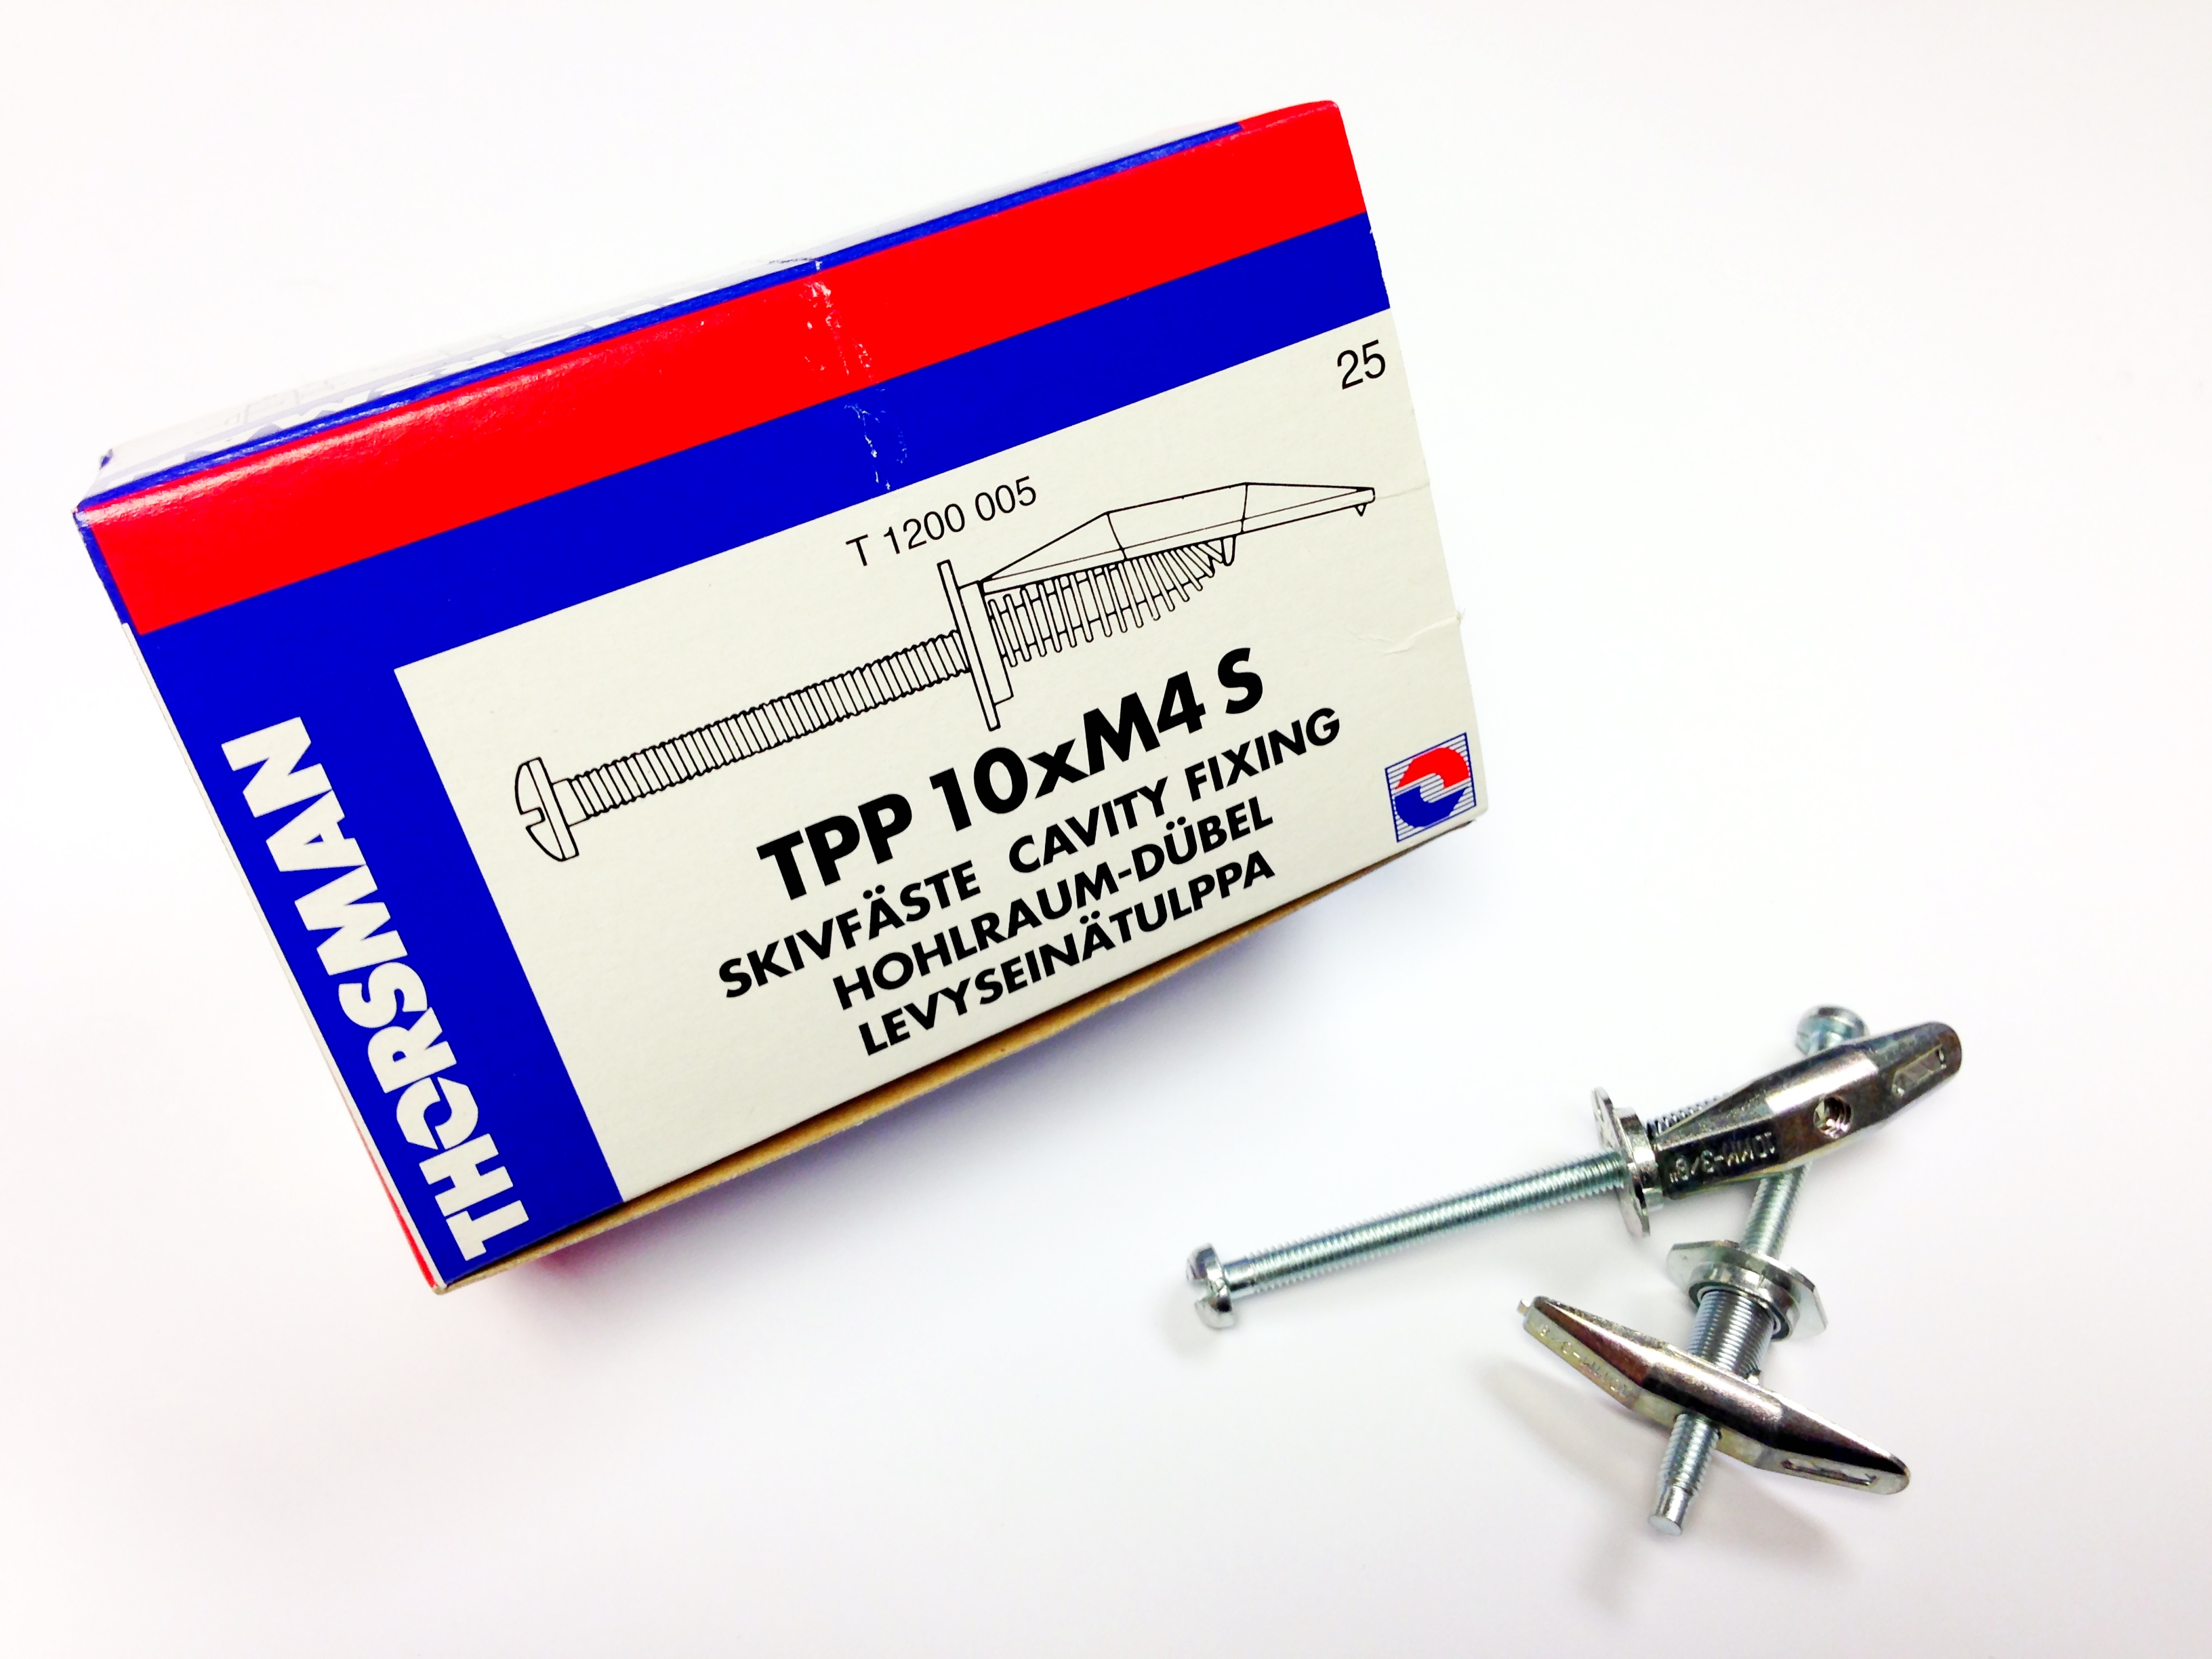 THORSMAN TPP10xM4S PLATTIPUG Cavity Fixing (M4 Screw) 